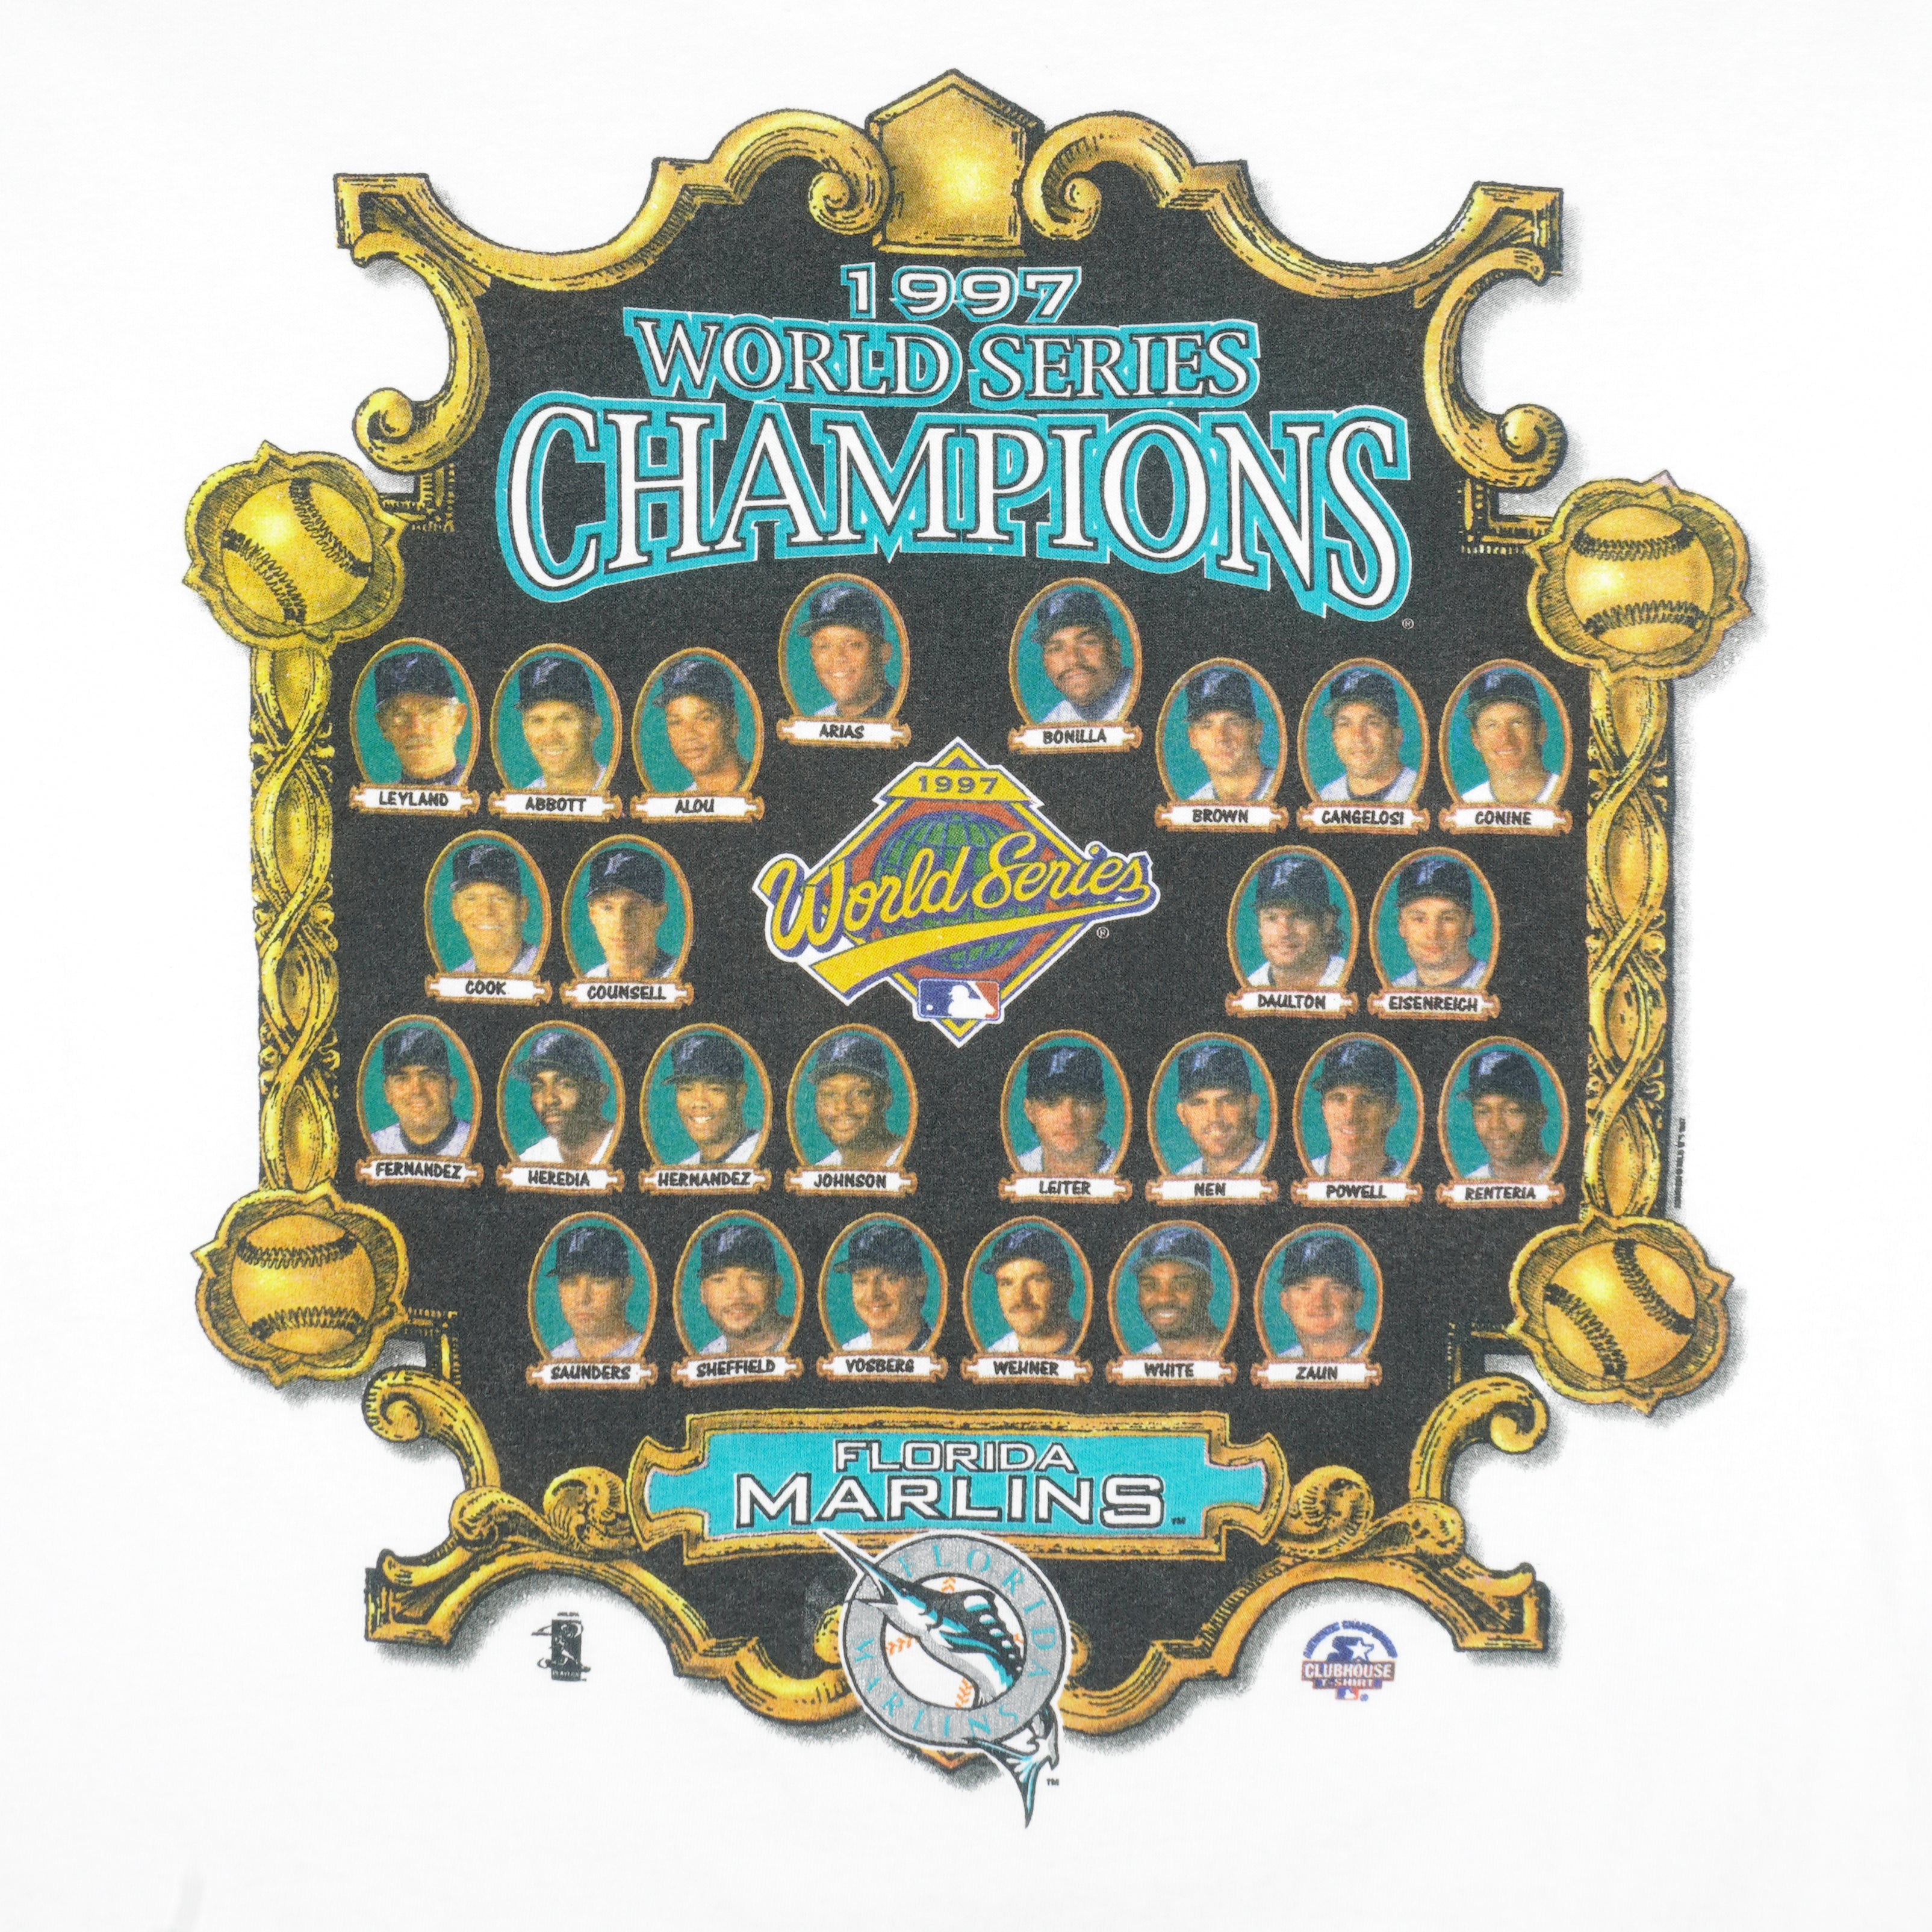 Marlins' 1997 World Series championship